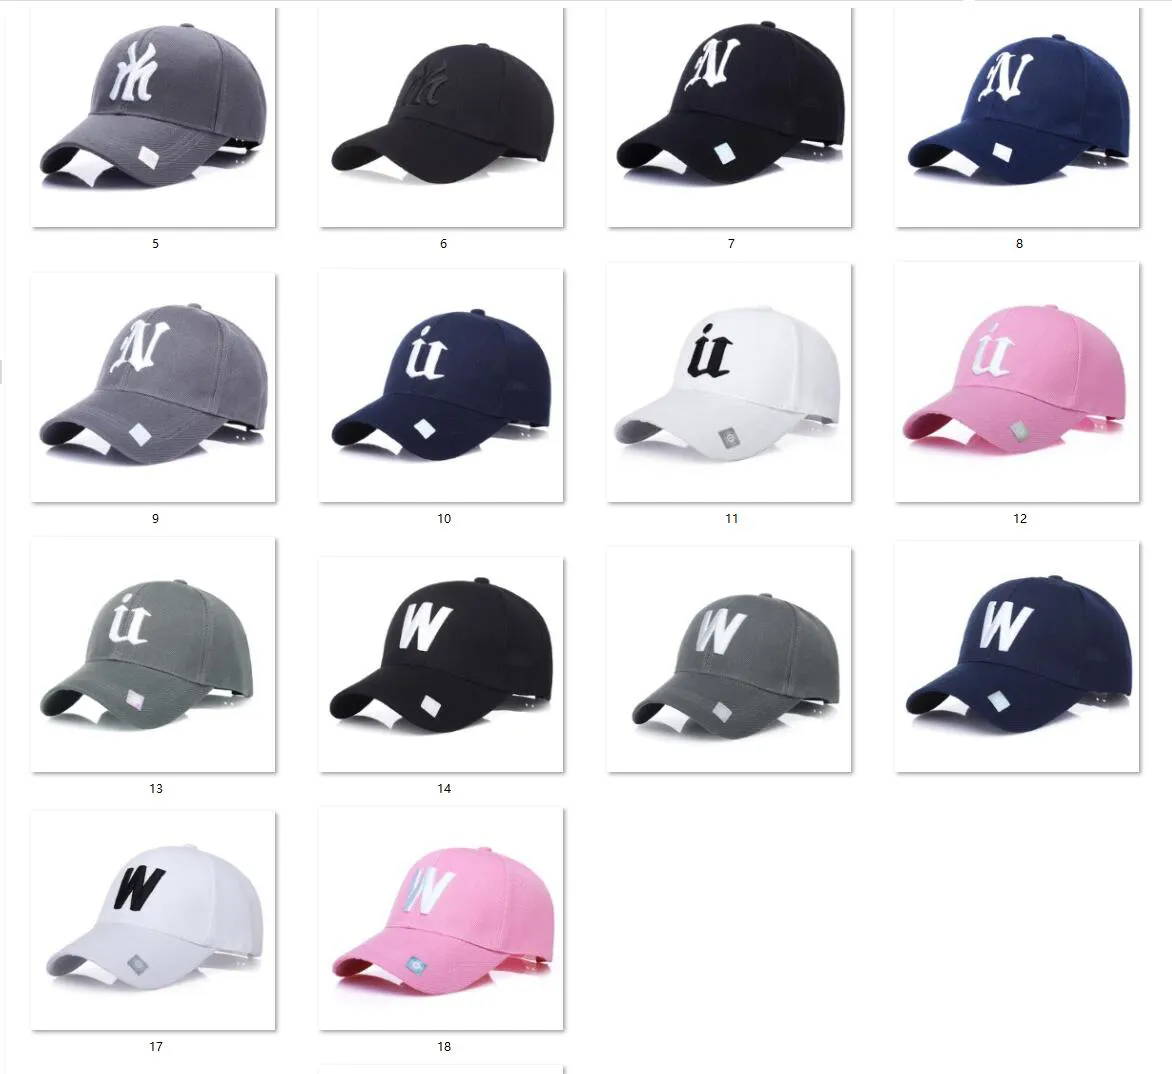 Versatile Canvas Baseball Caps For Men And Women Ideal For Summer